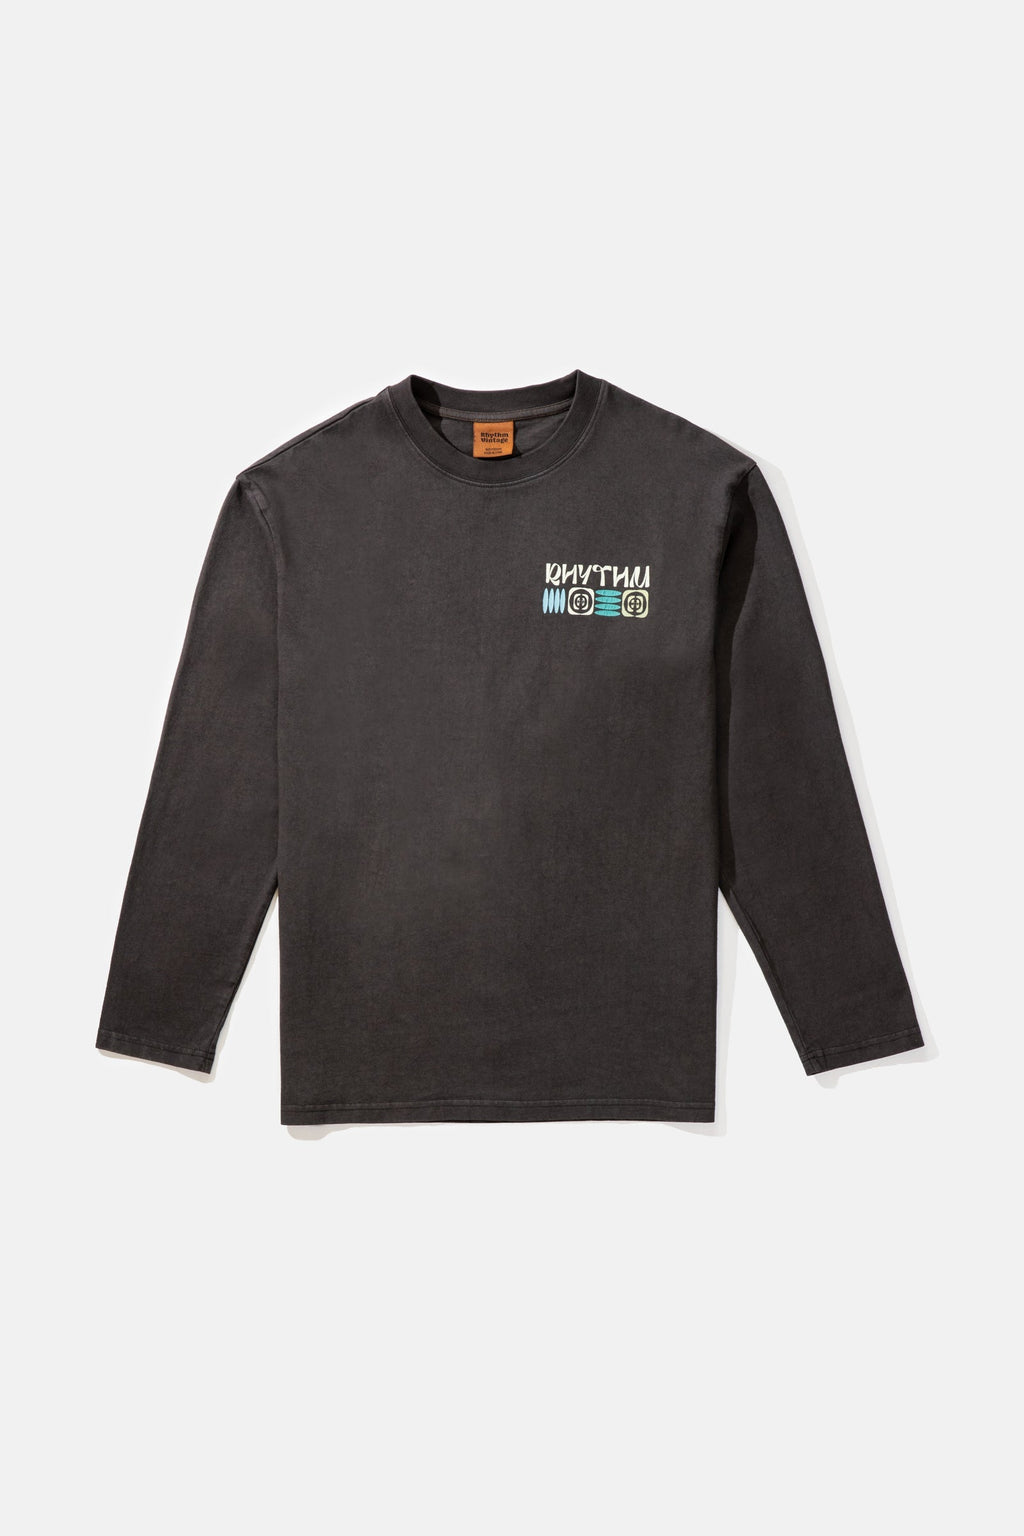 Notch Vintage Ls T-Shirt Vintage Black – Rhythm US